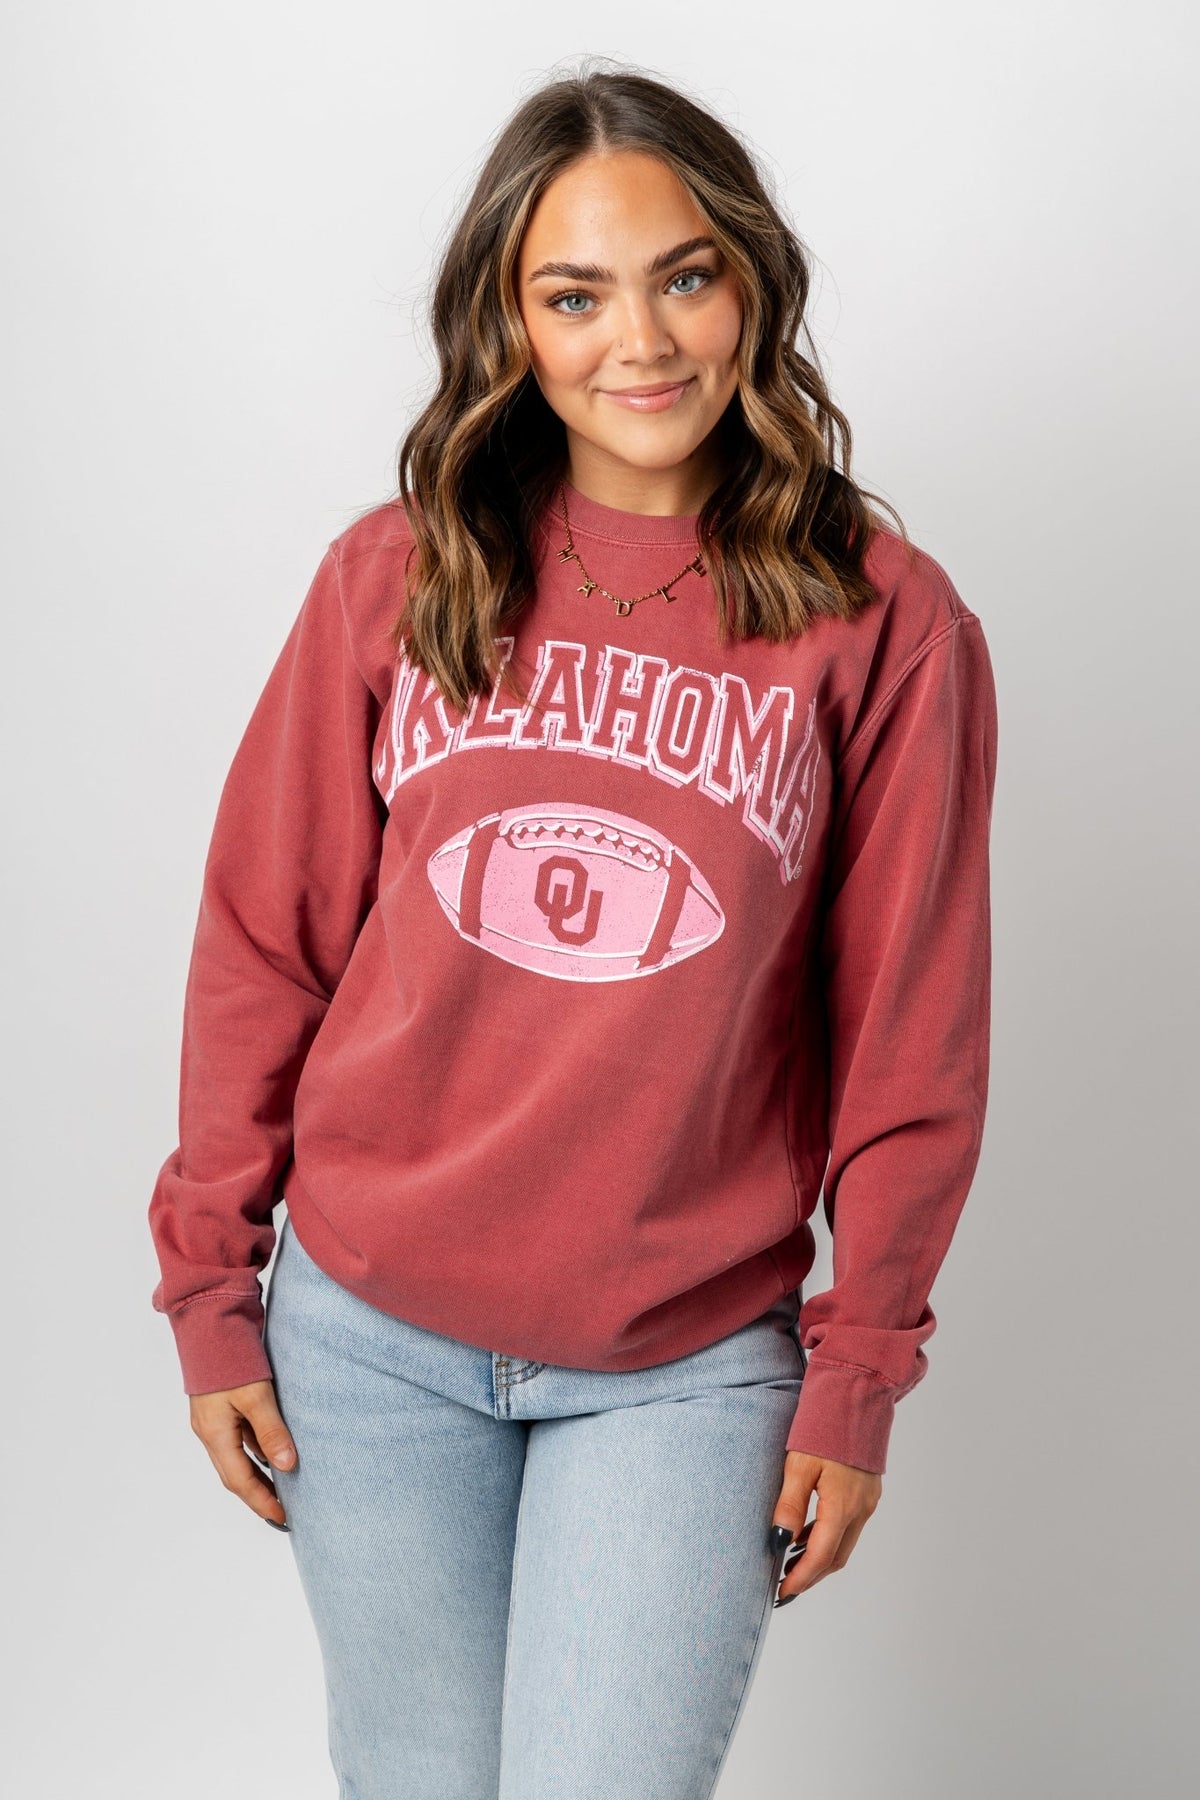 OU OU Wonka football comfort color sweatshirt crimson t-shirt | Lush Fashion Lounge Trendy Oklahoma University Sooners Apparel & Cute Gameday T-Shirts